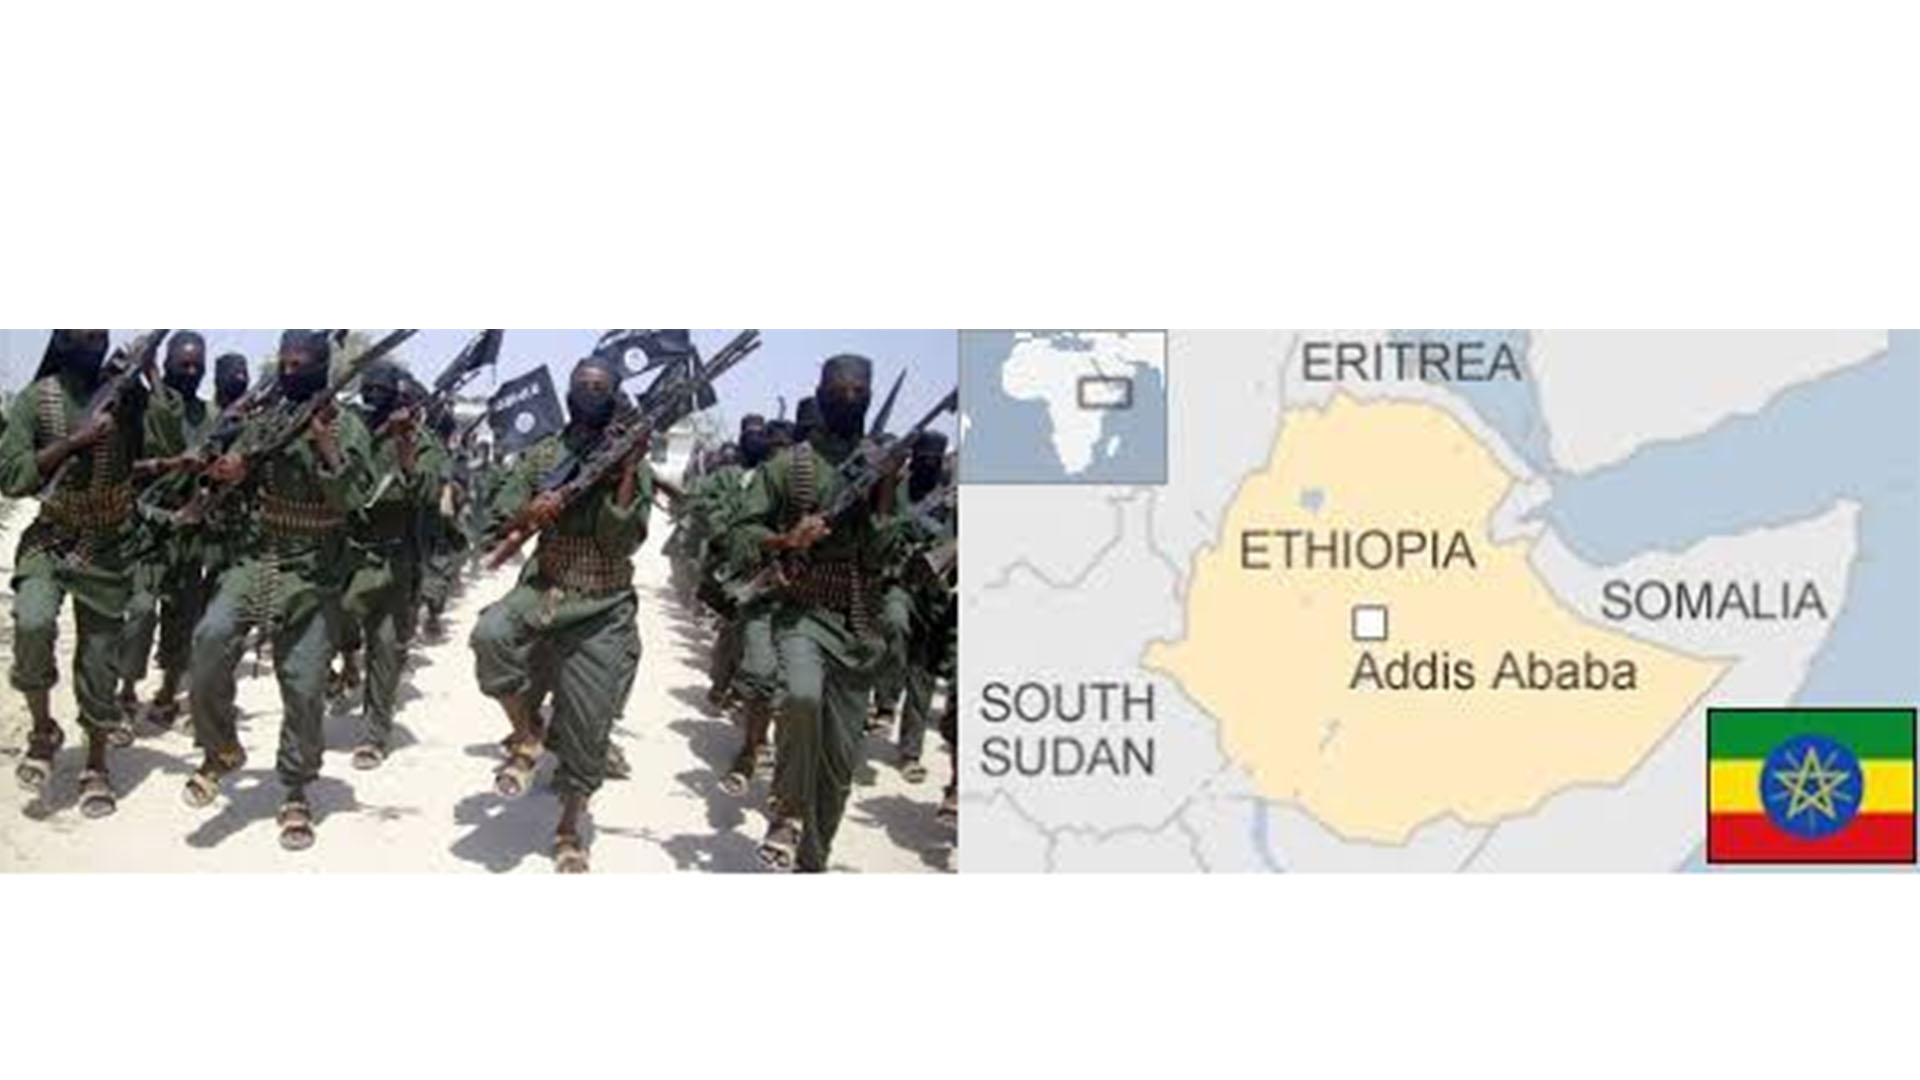 More than 30 killed in militia attacks in western Ethiopia